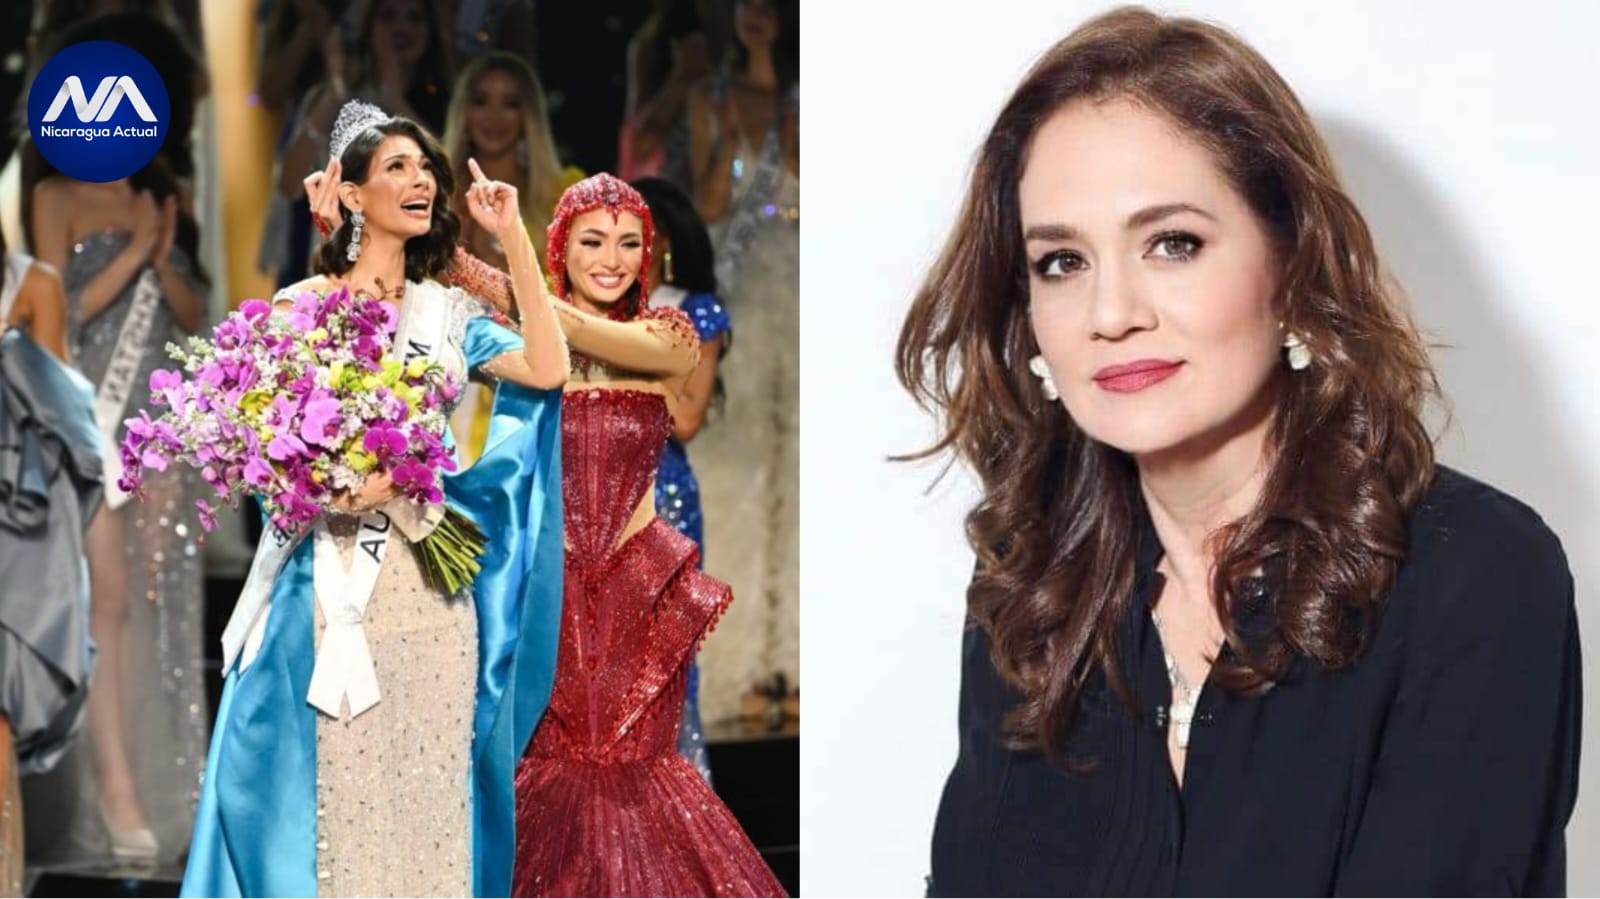 Karen Celebertti anuncia su retiro de Miss Nicaragua.